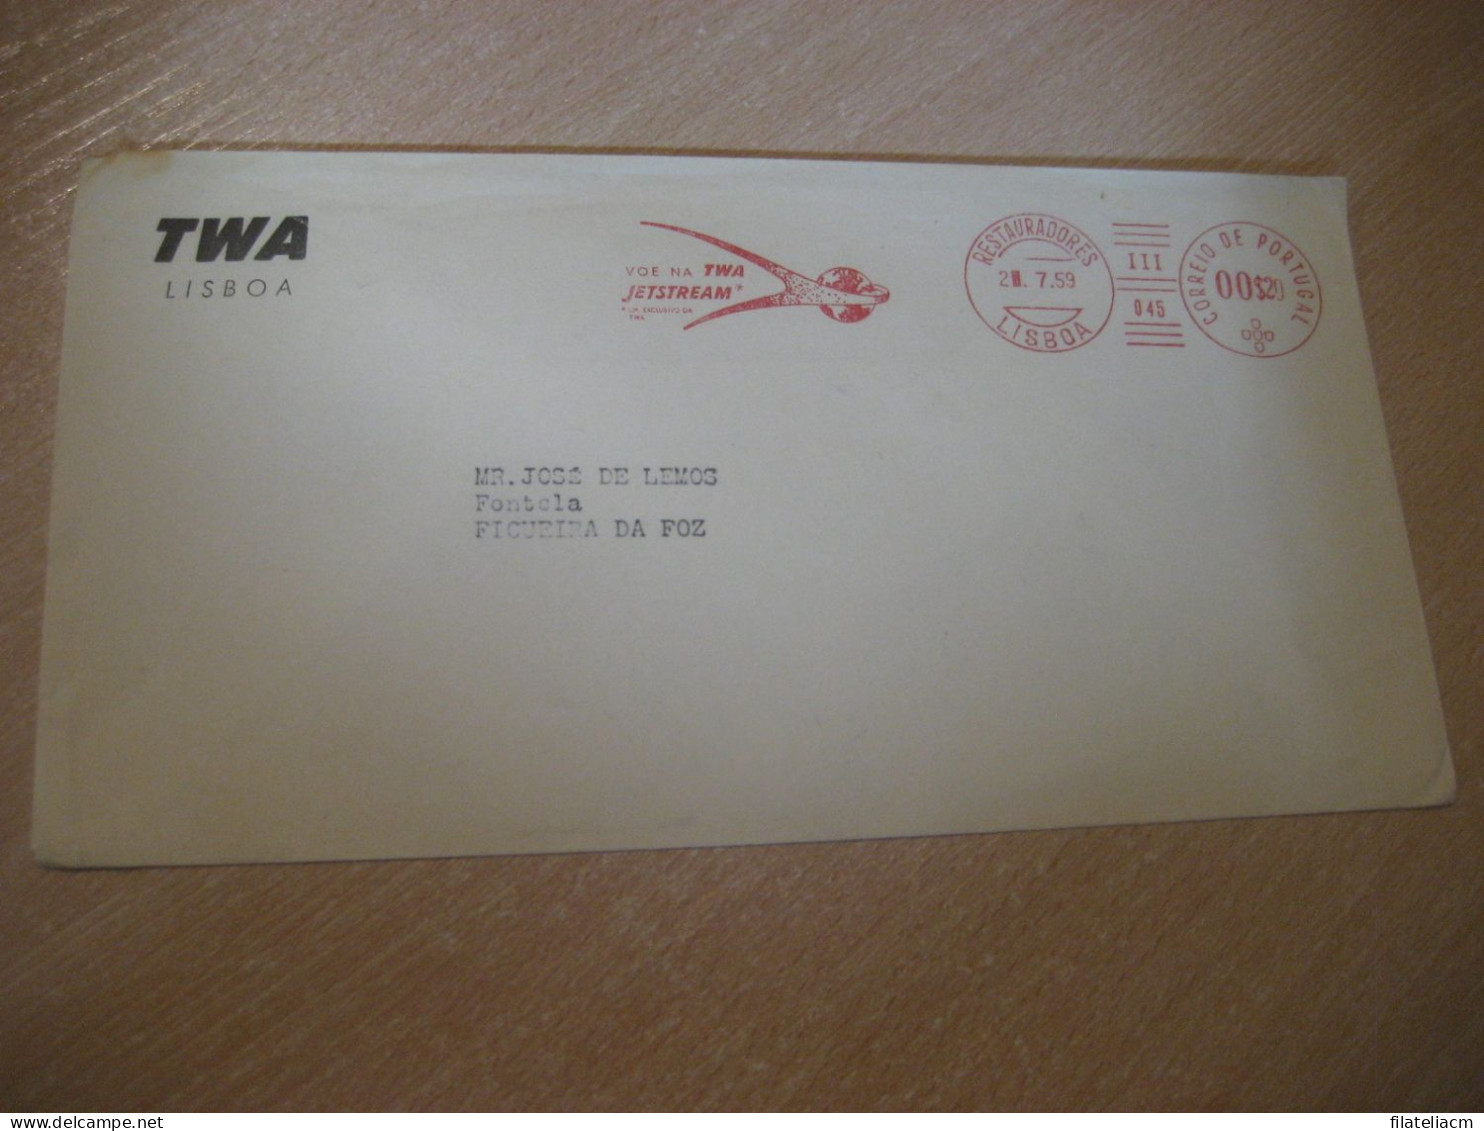 LISBOA 1959 To Figueira Da Foz TWA Jetstream Airline Trans World Airlines Flight Meter Mail Cancel Cover PORTUGAL - Brieven En Documenten